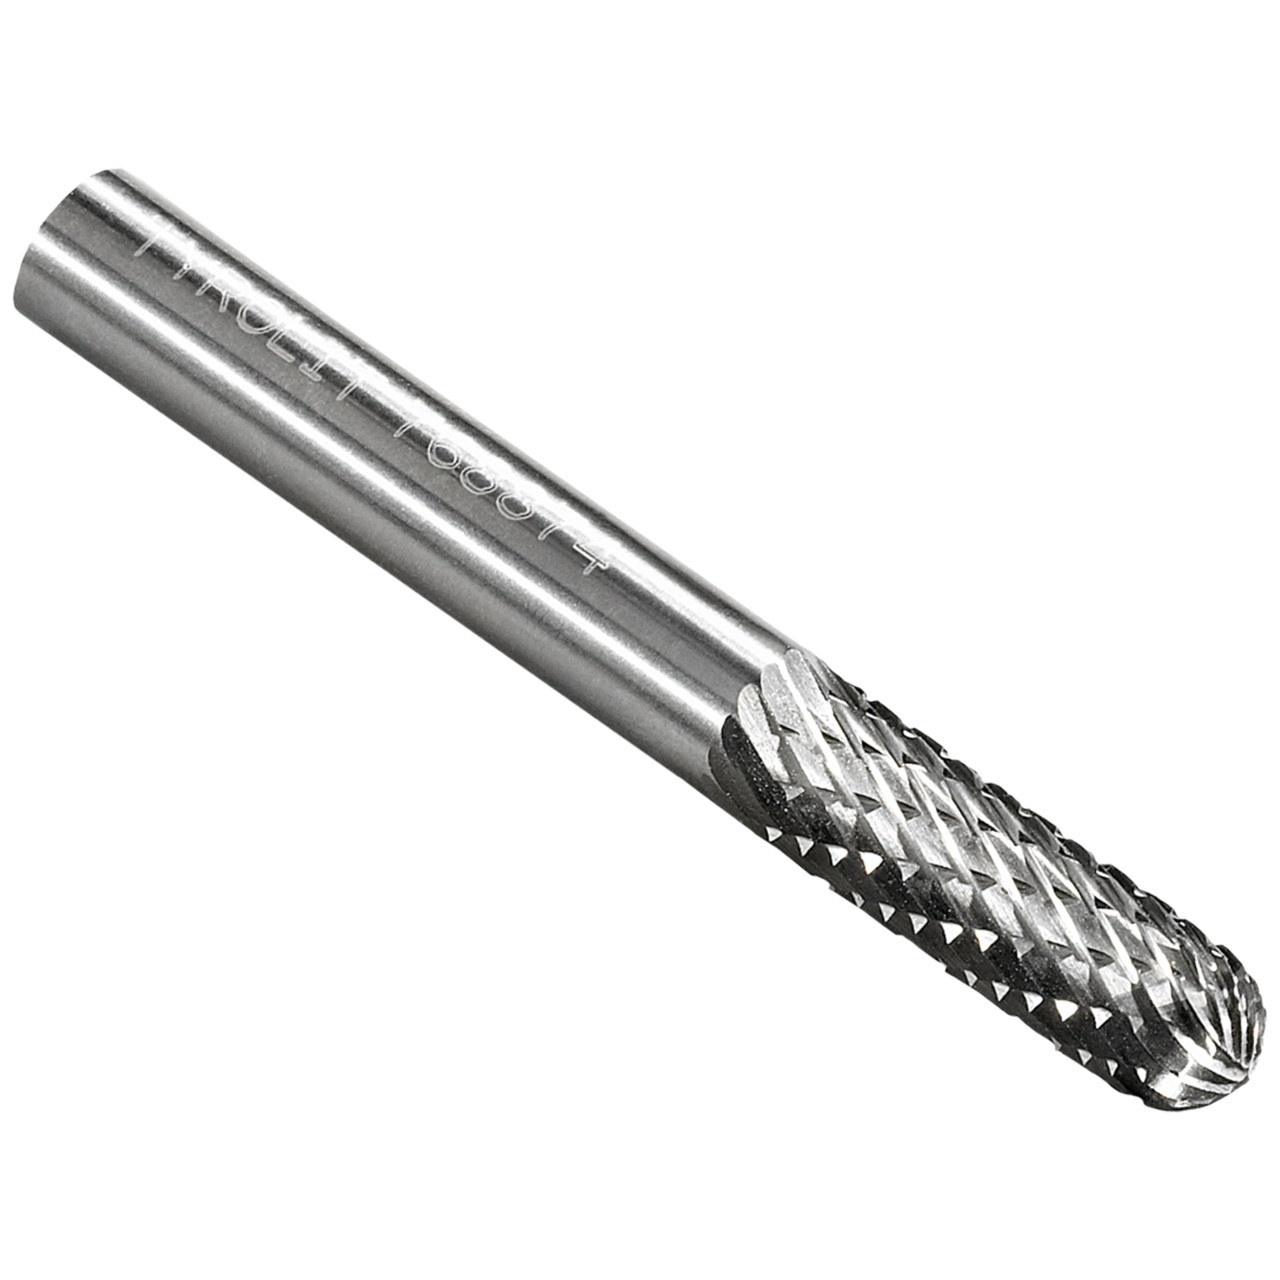 Fresa in metallo duro Tyrolit DxT-SxL 12x25-6x70 Per ghisa, acciaio e acciaio inox, forma: 52WRC - cilindrica, Art. 766133